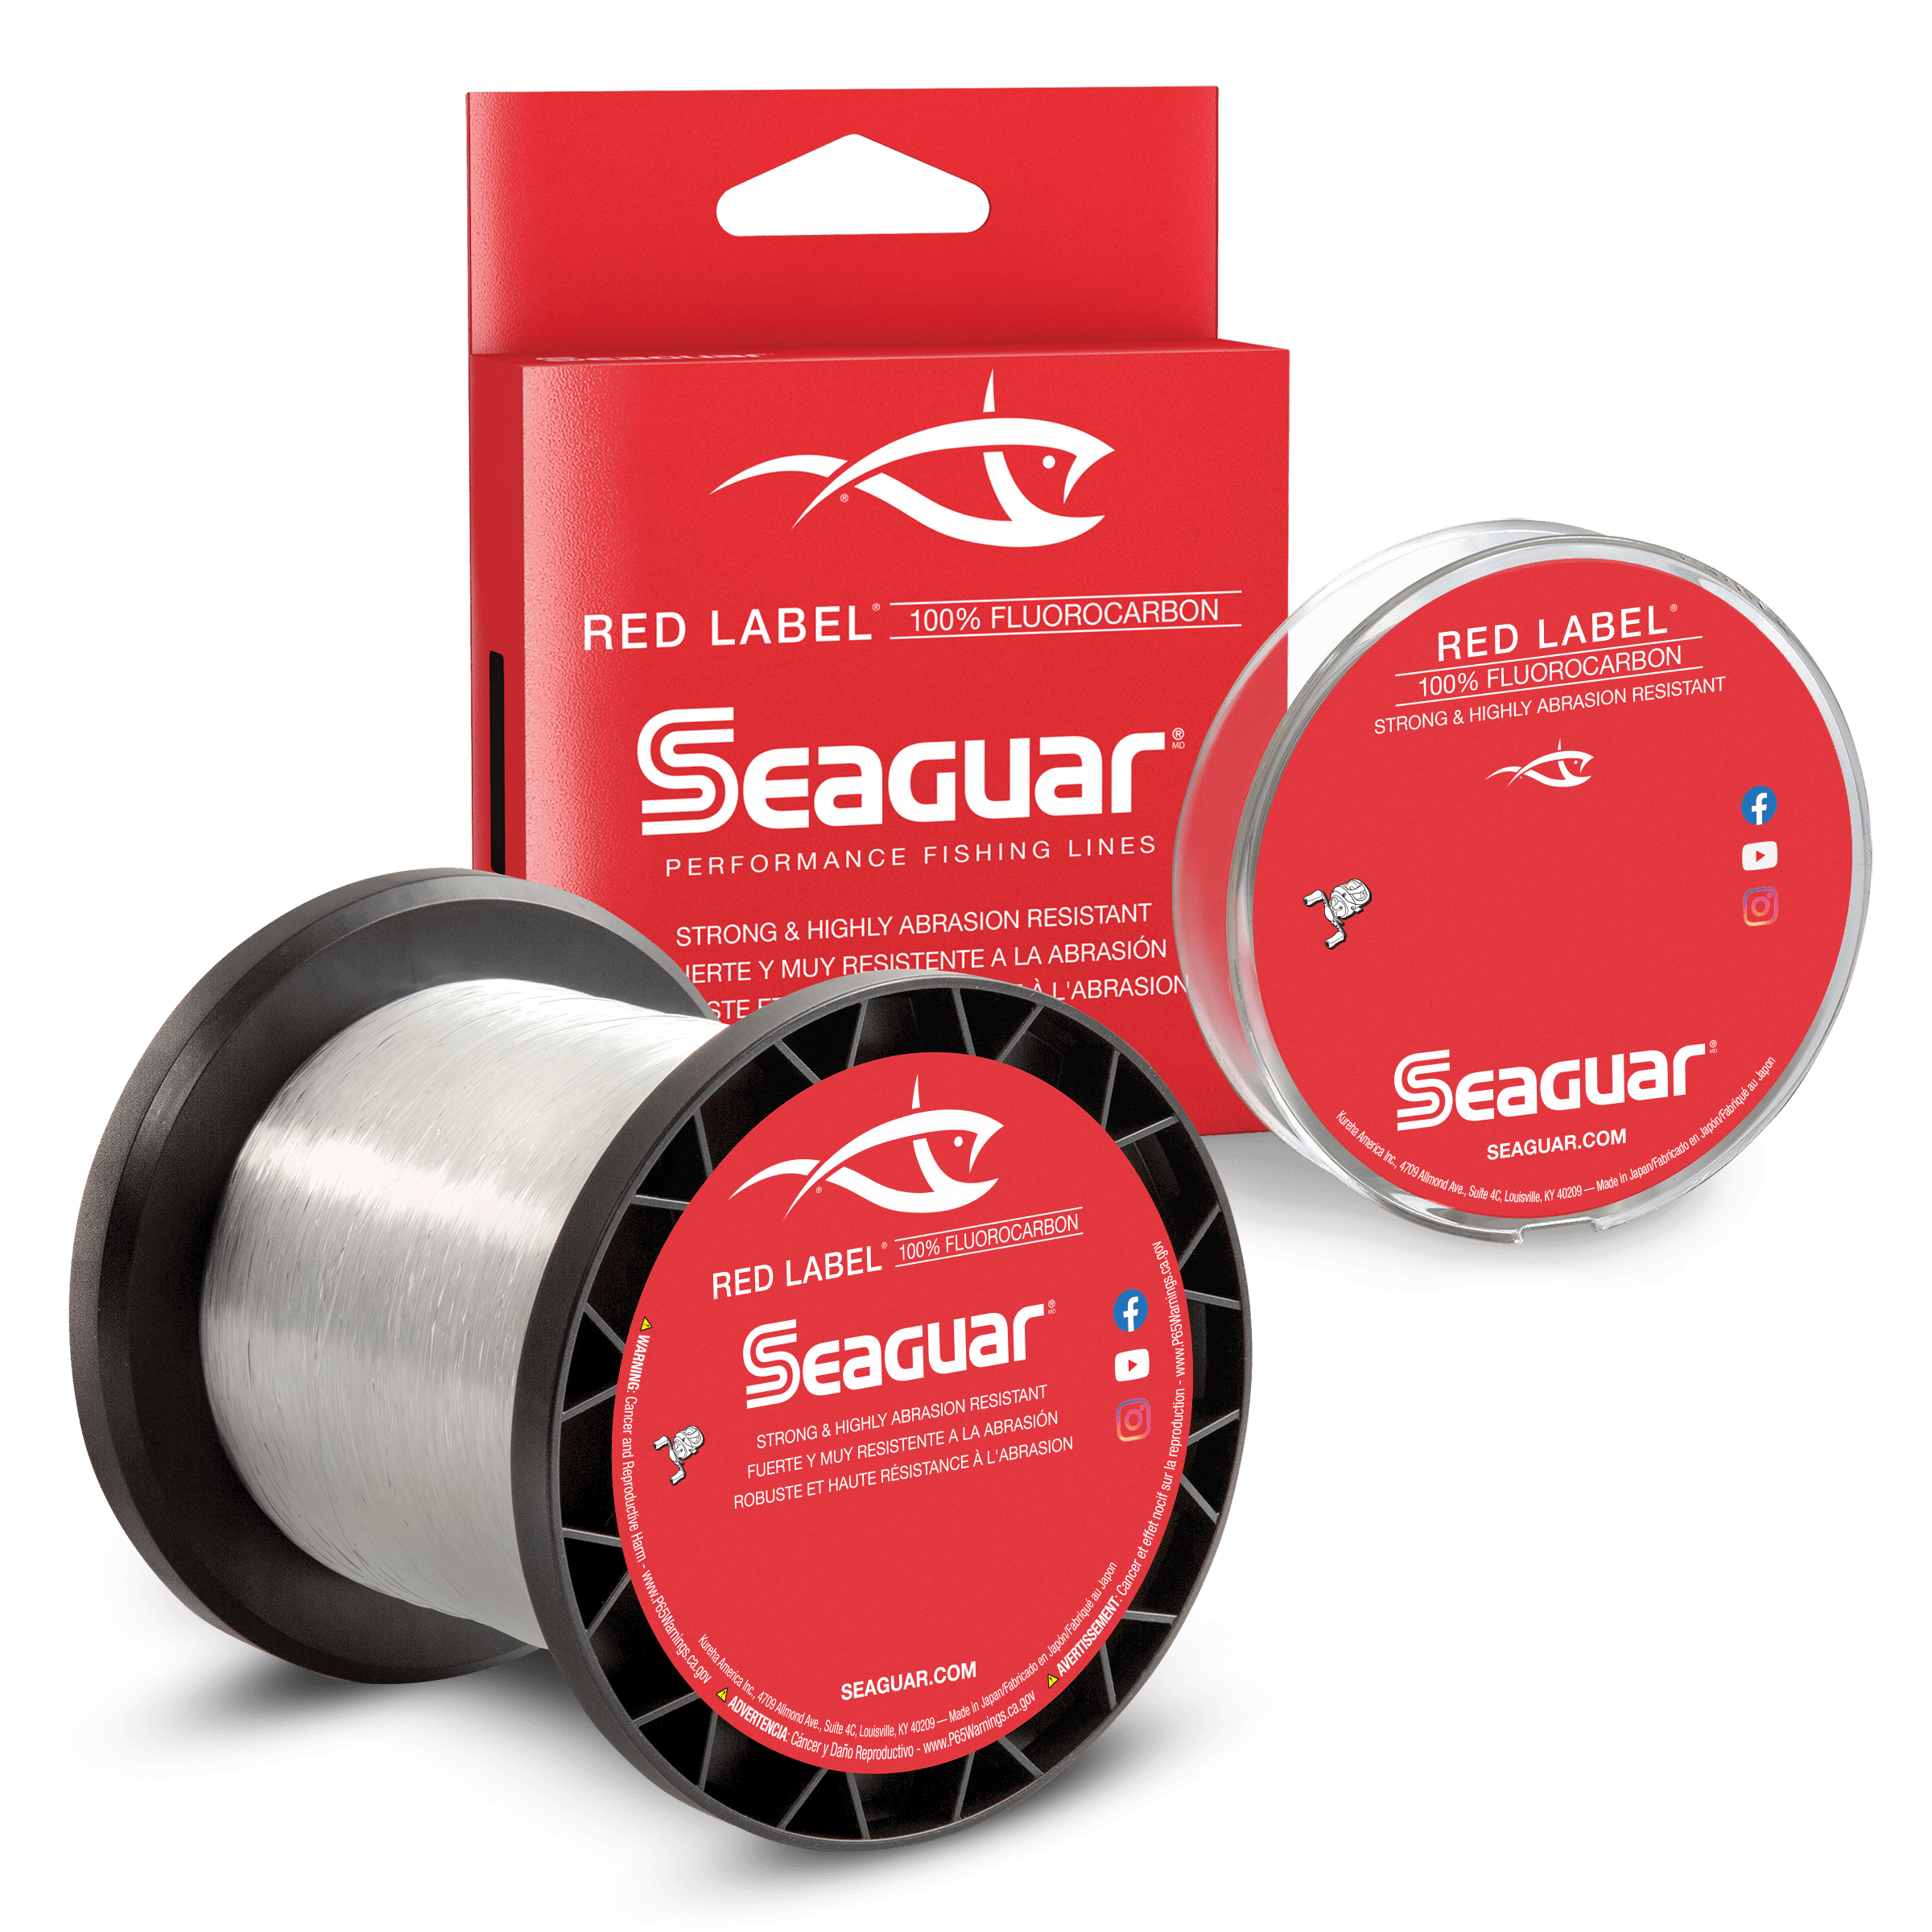 Seaguar Gold Label Fluorocarbon Fishing Line – Fishing Online